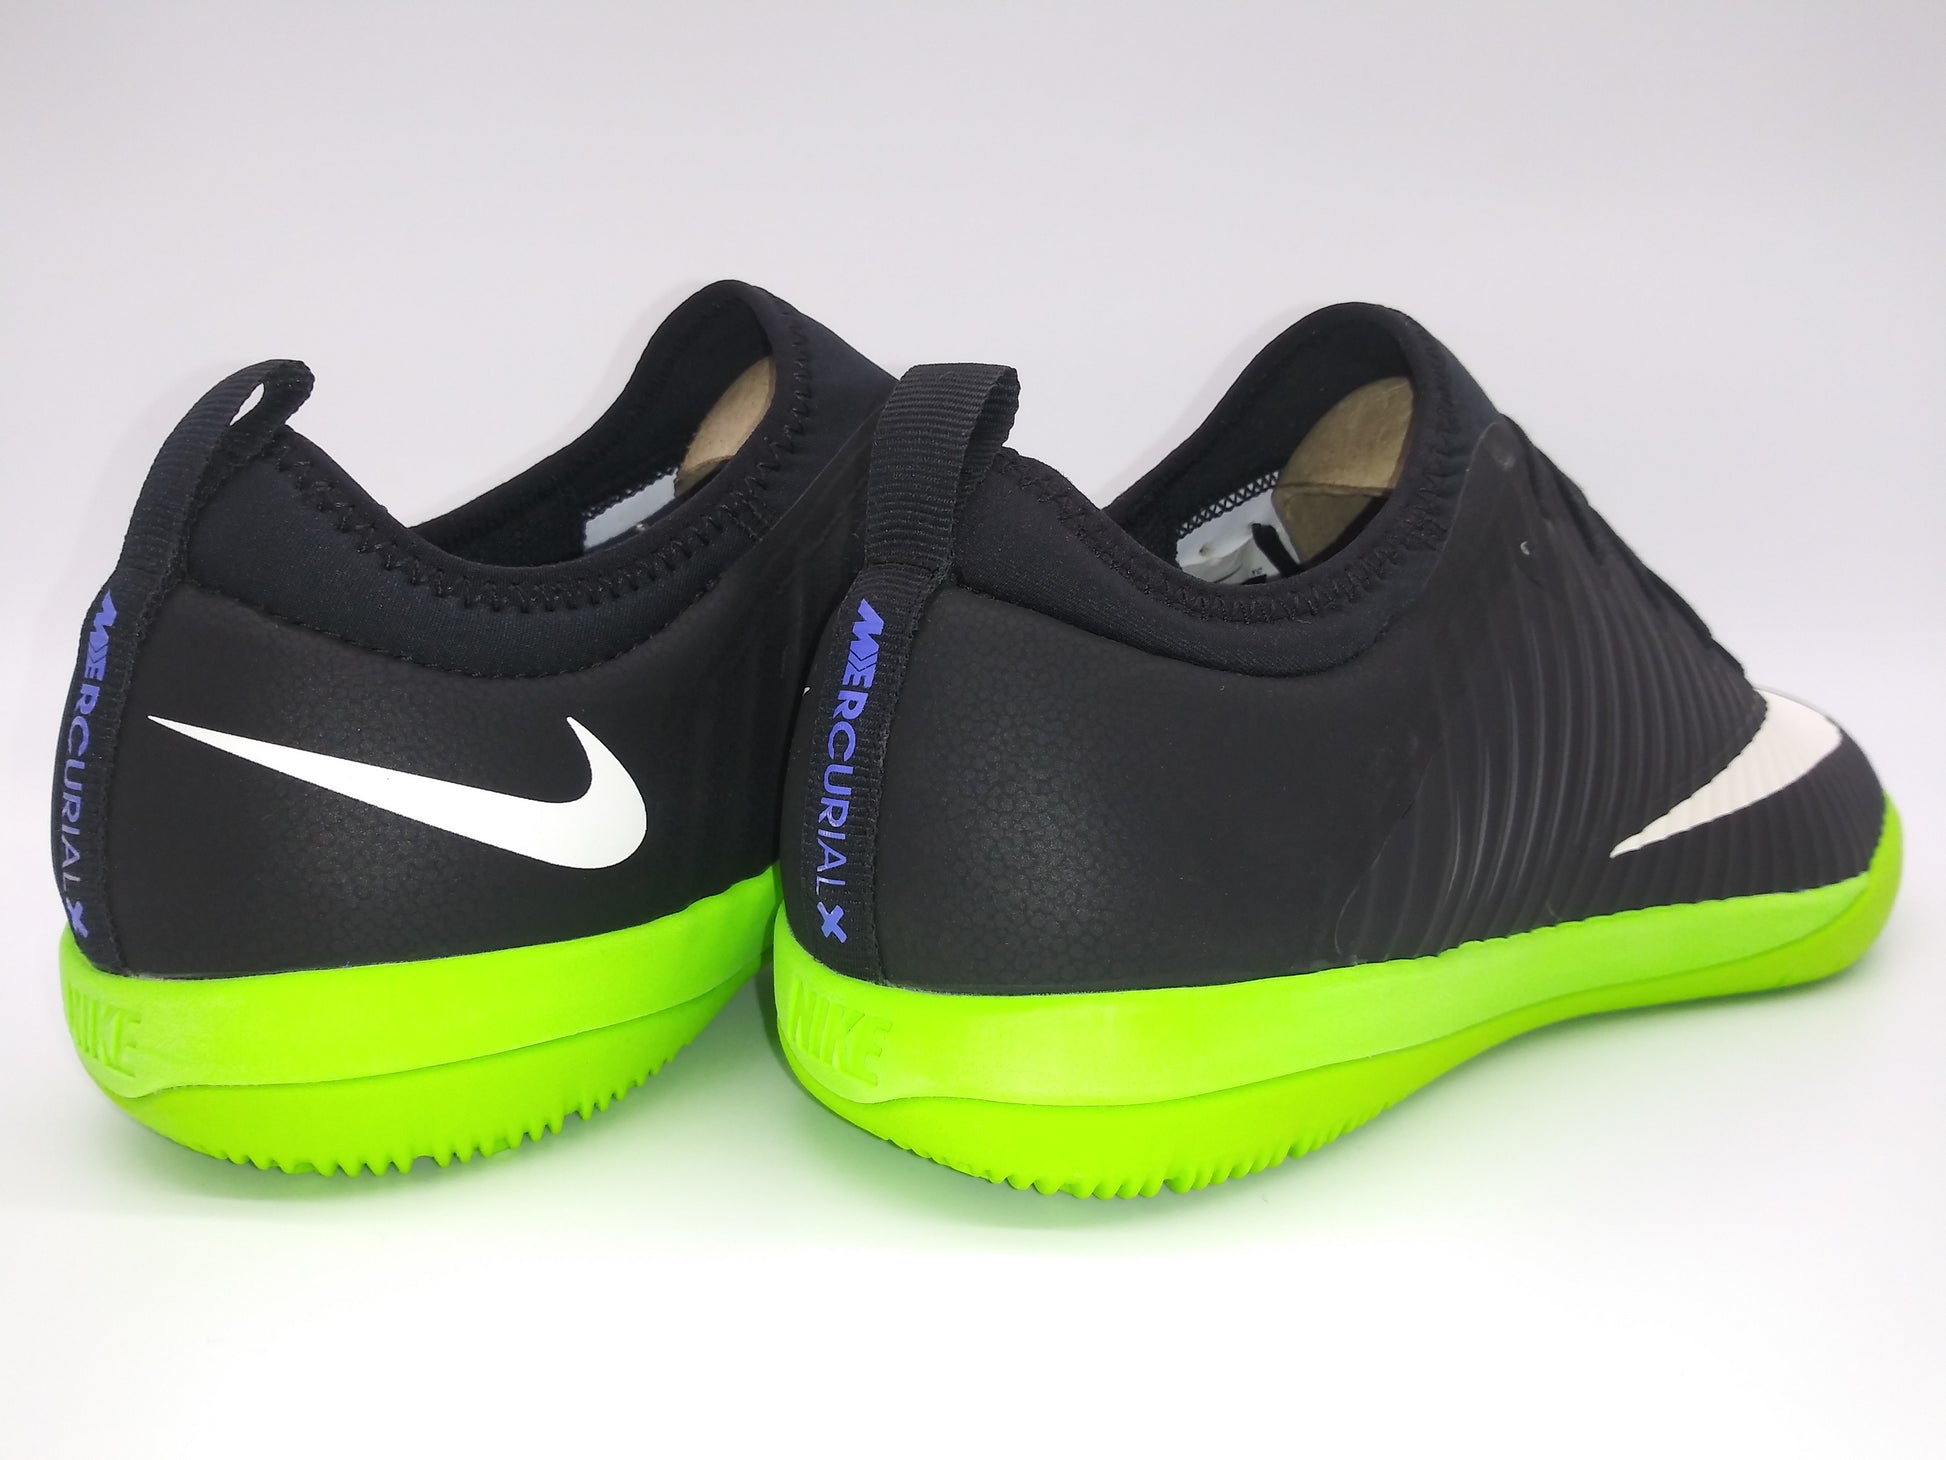 Nike Mercurialx Finale II IC Black Green Footwear